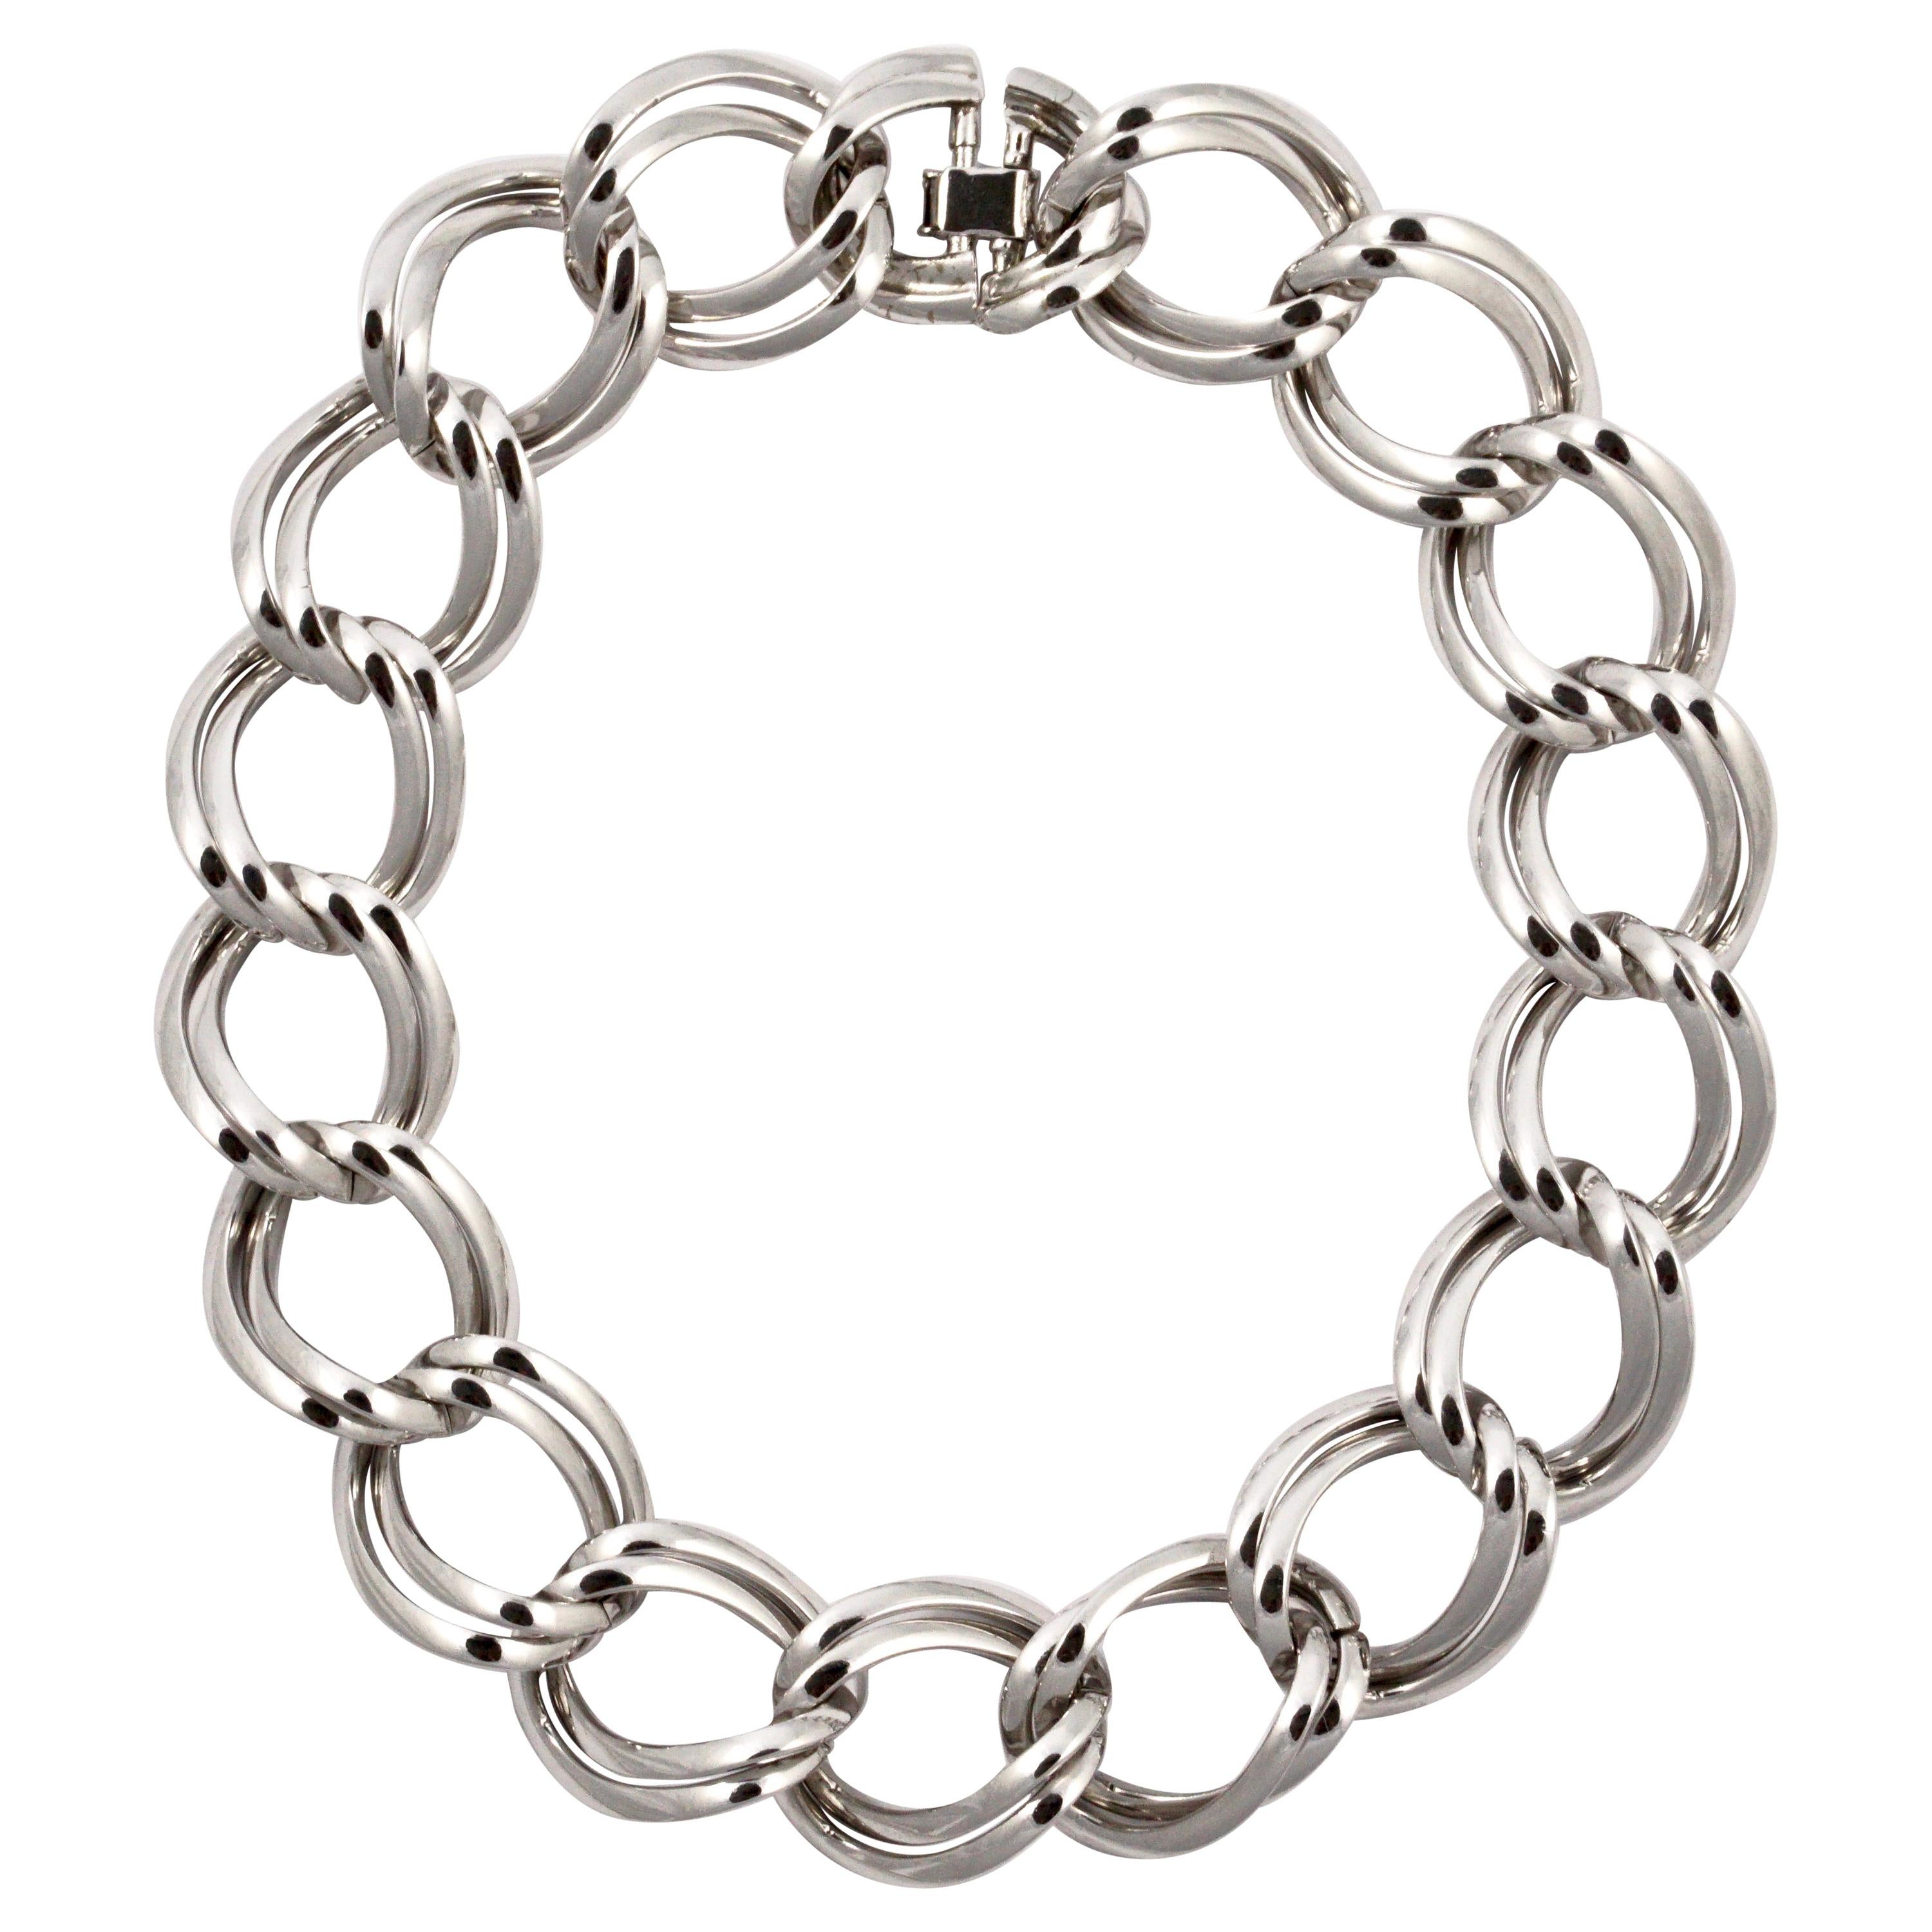 Nina Ricci Silver Plated Double Chain Link Collar Necklace circa 1980s